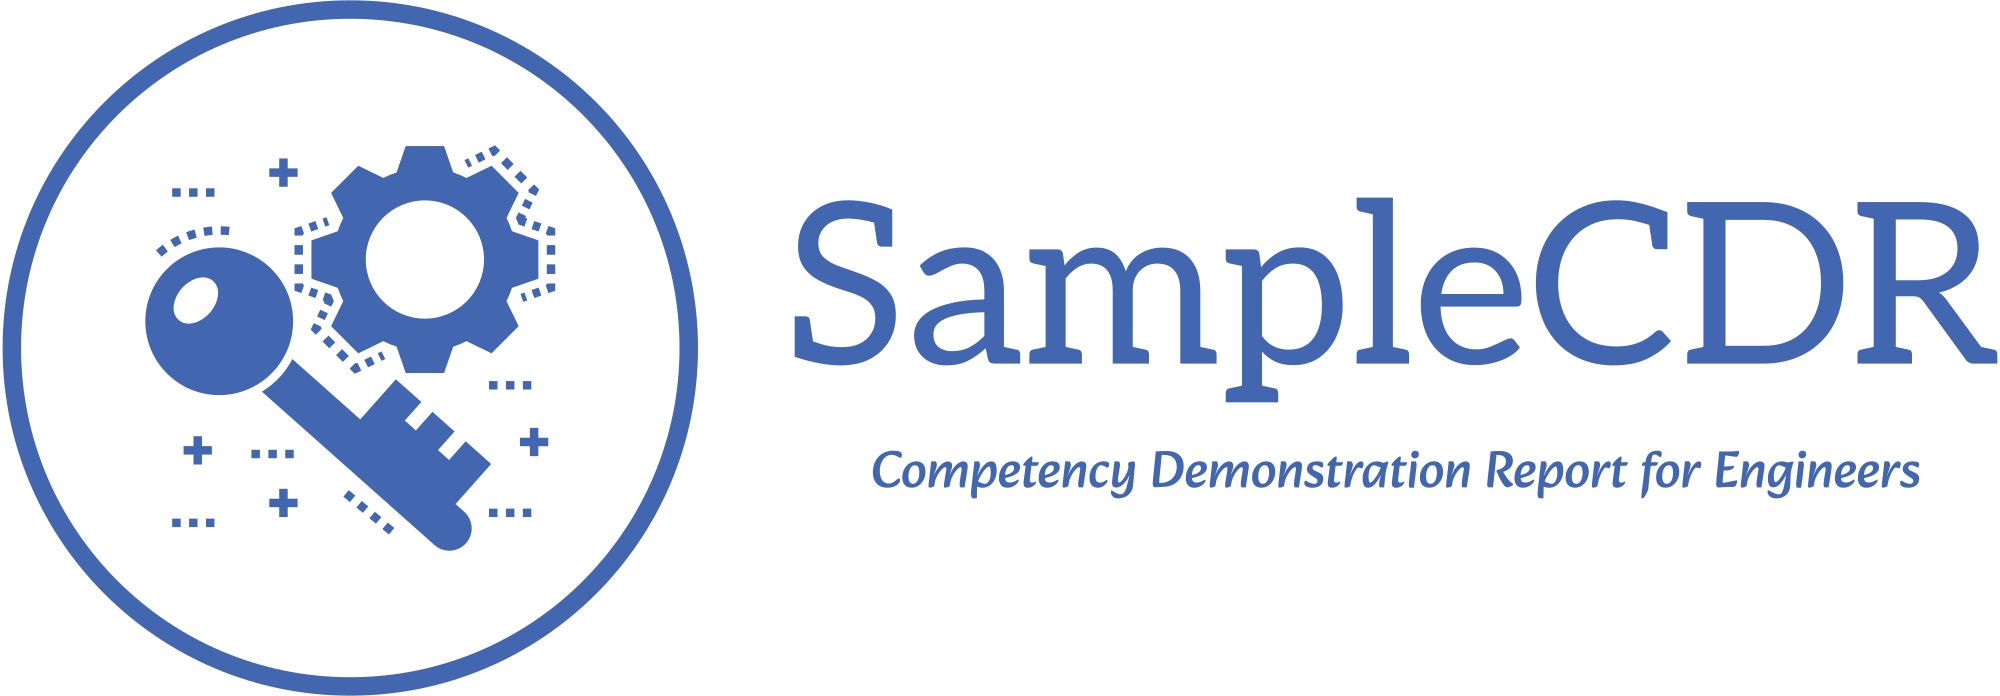 samplecdr-high-resolution-logo-transparent